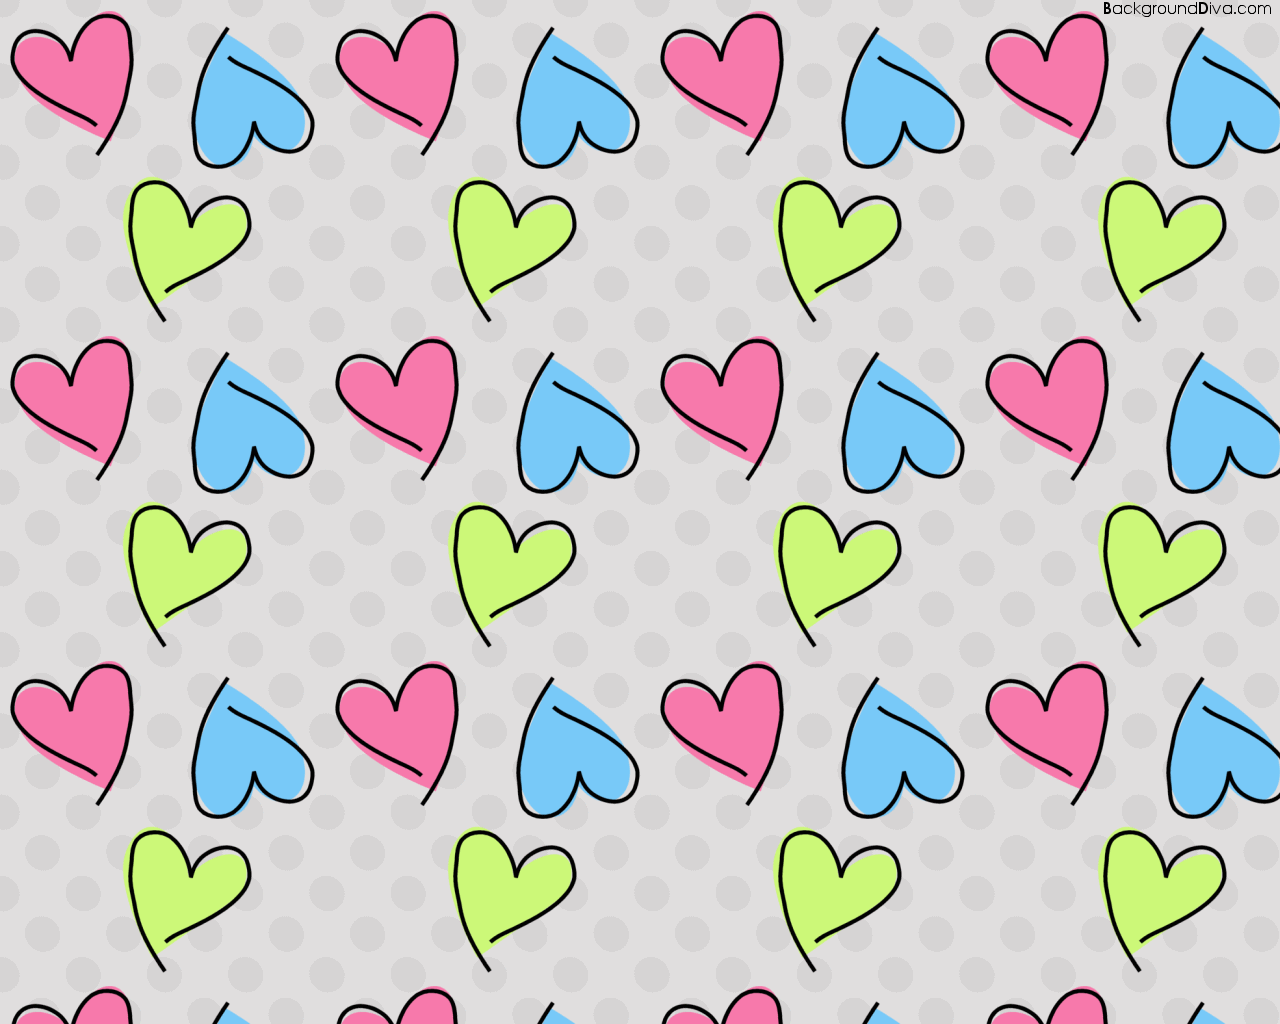 600+] Hearts Wallpapers | Wallpapers.com